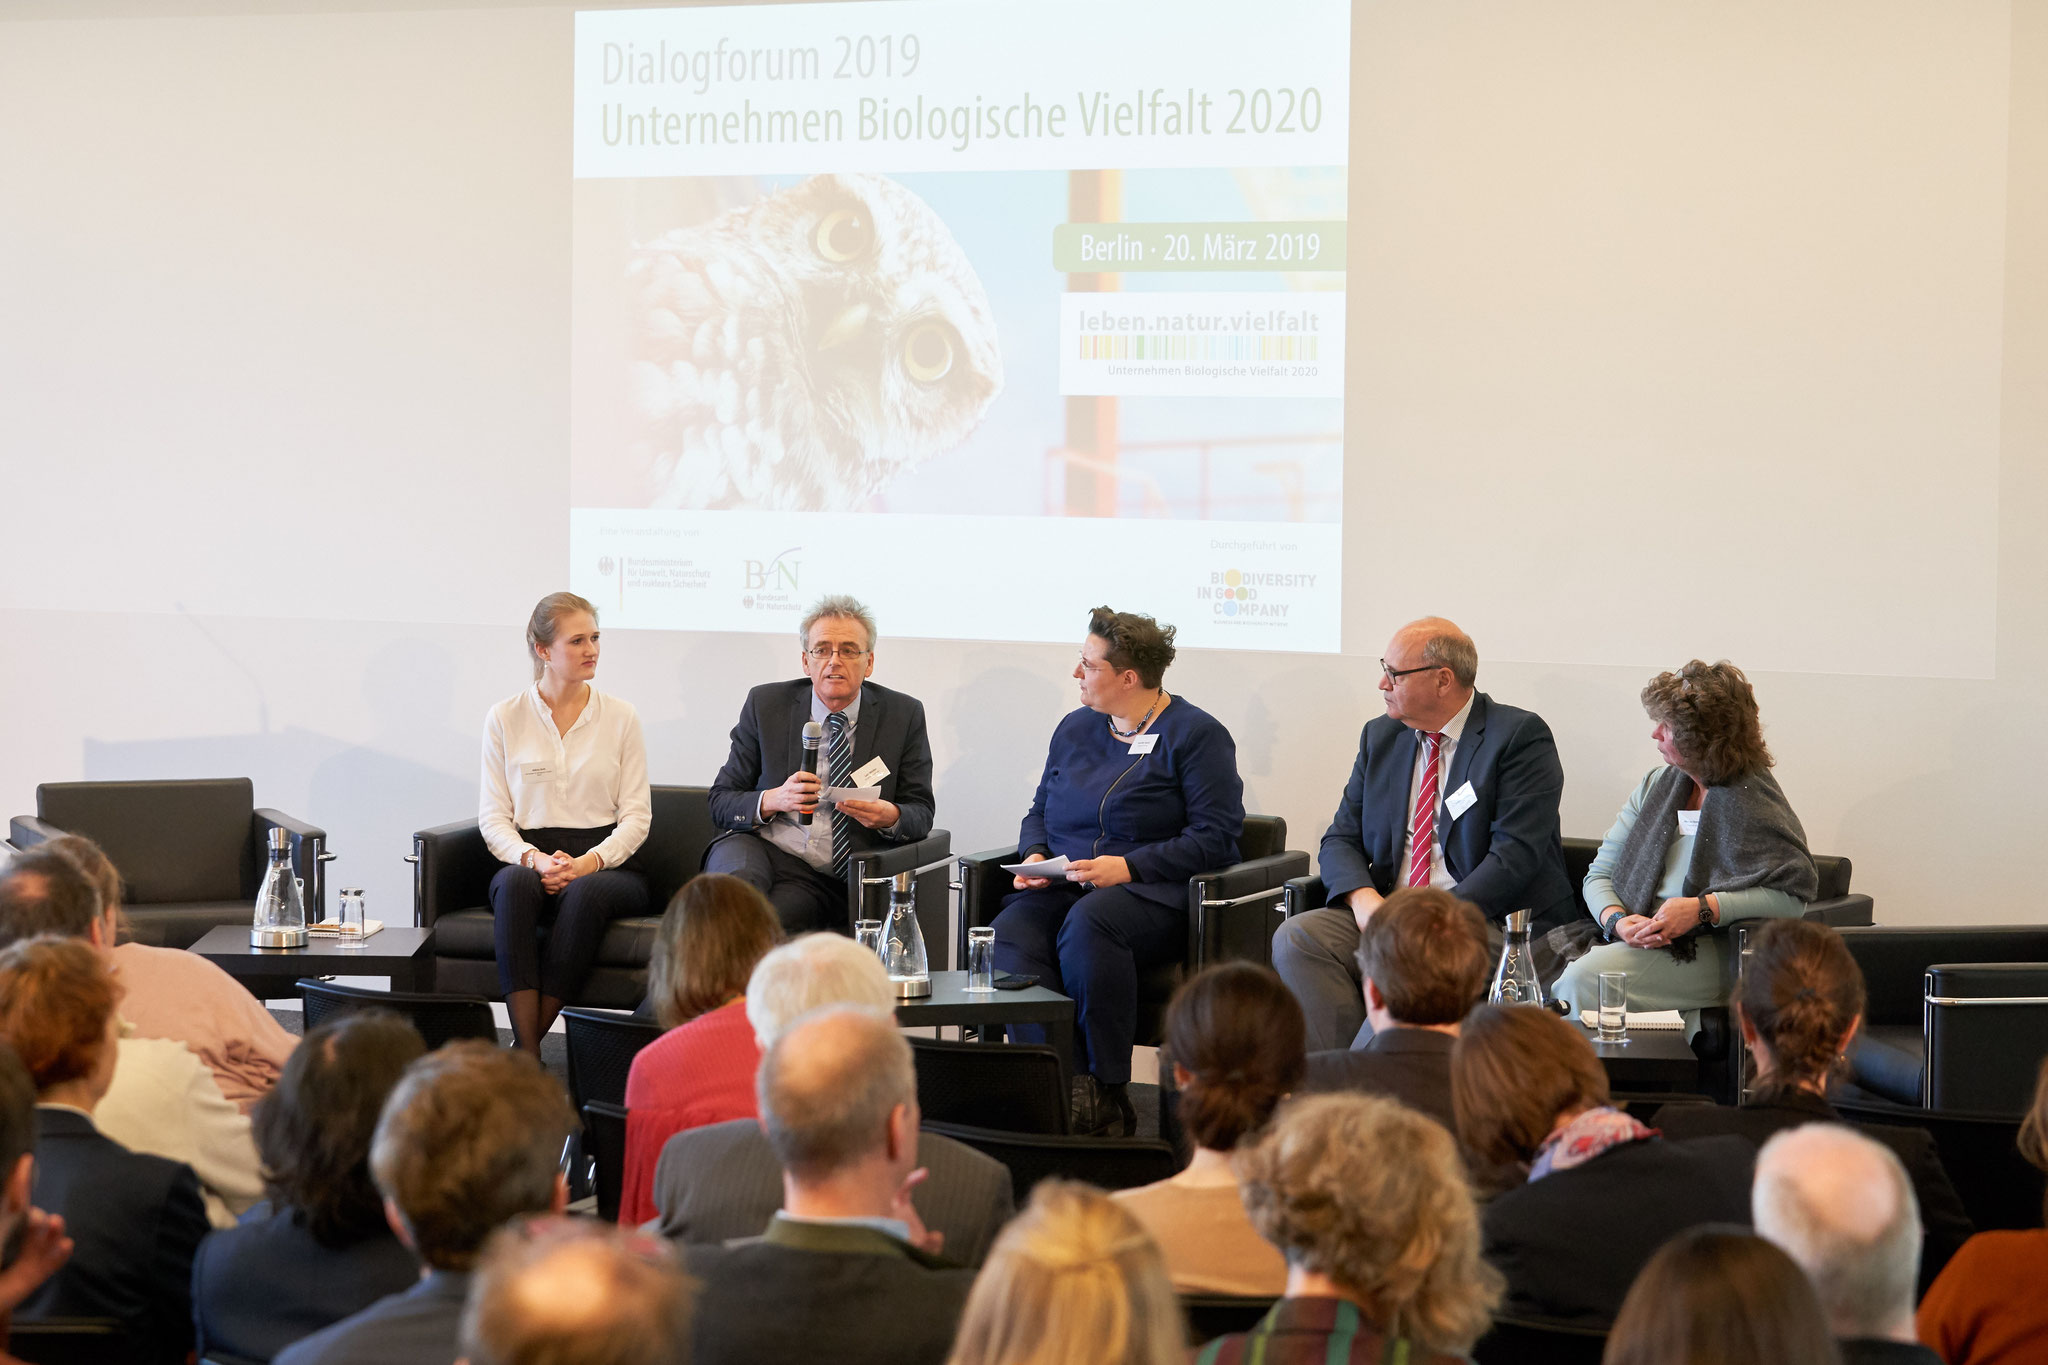 Dialogforum 2019 UBi 2020, Bild: F. Nürnberger für 'Biodiversity in Good Company' Initiative